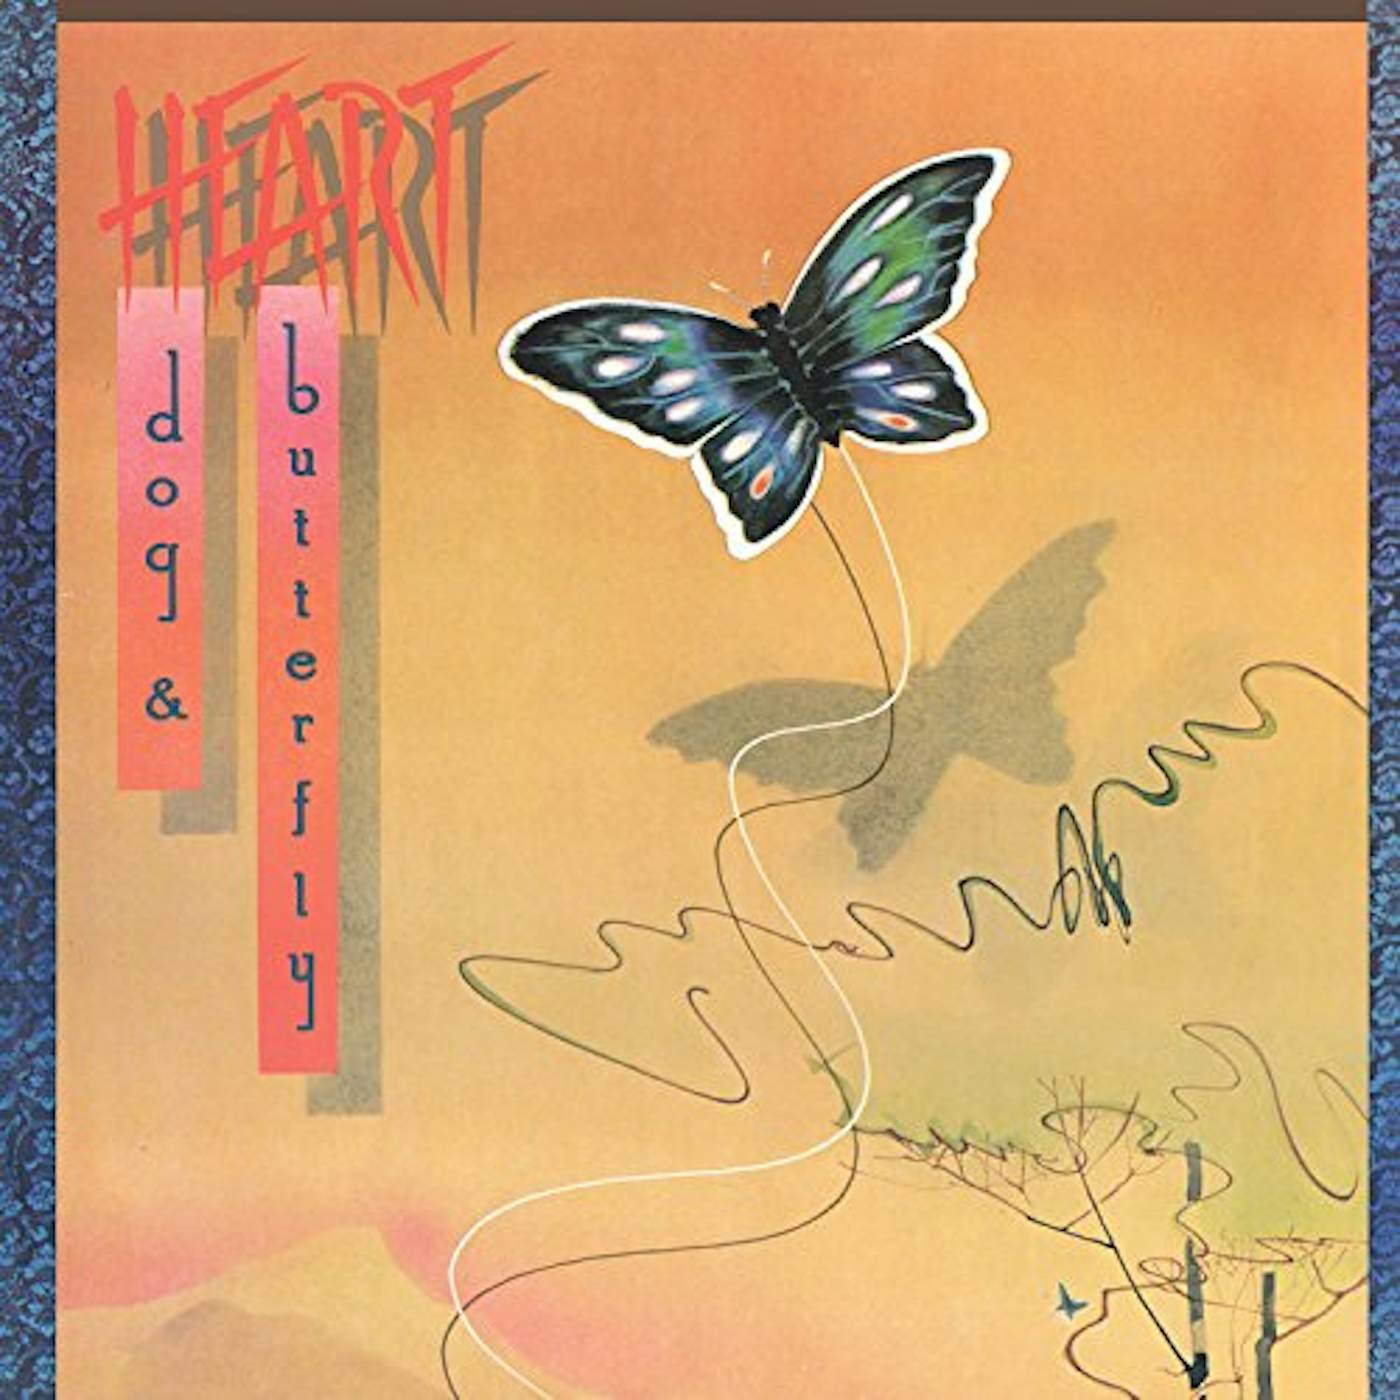 Heart Dog & Butterfly Vinyl Record